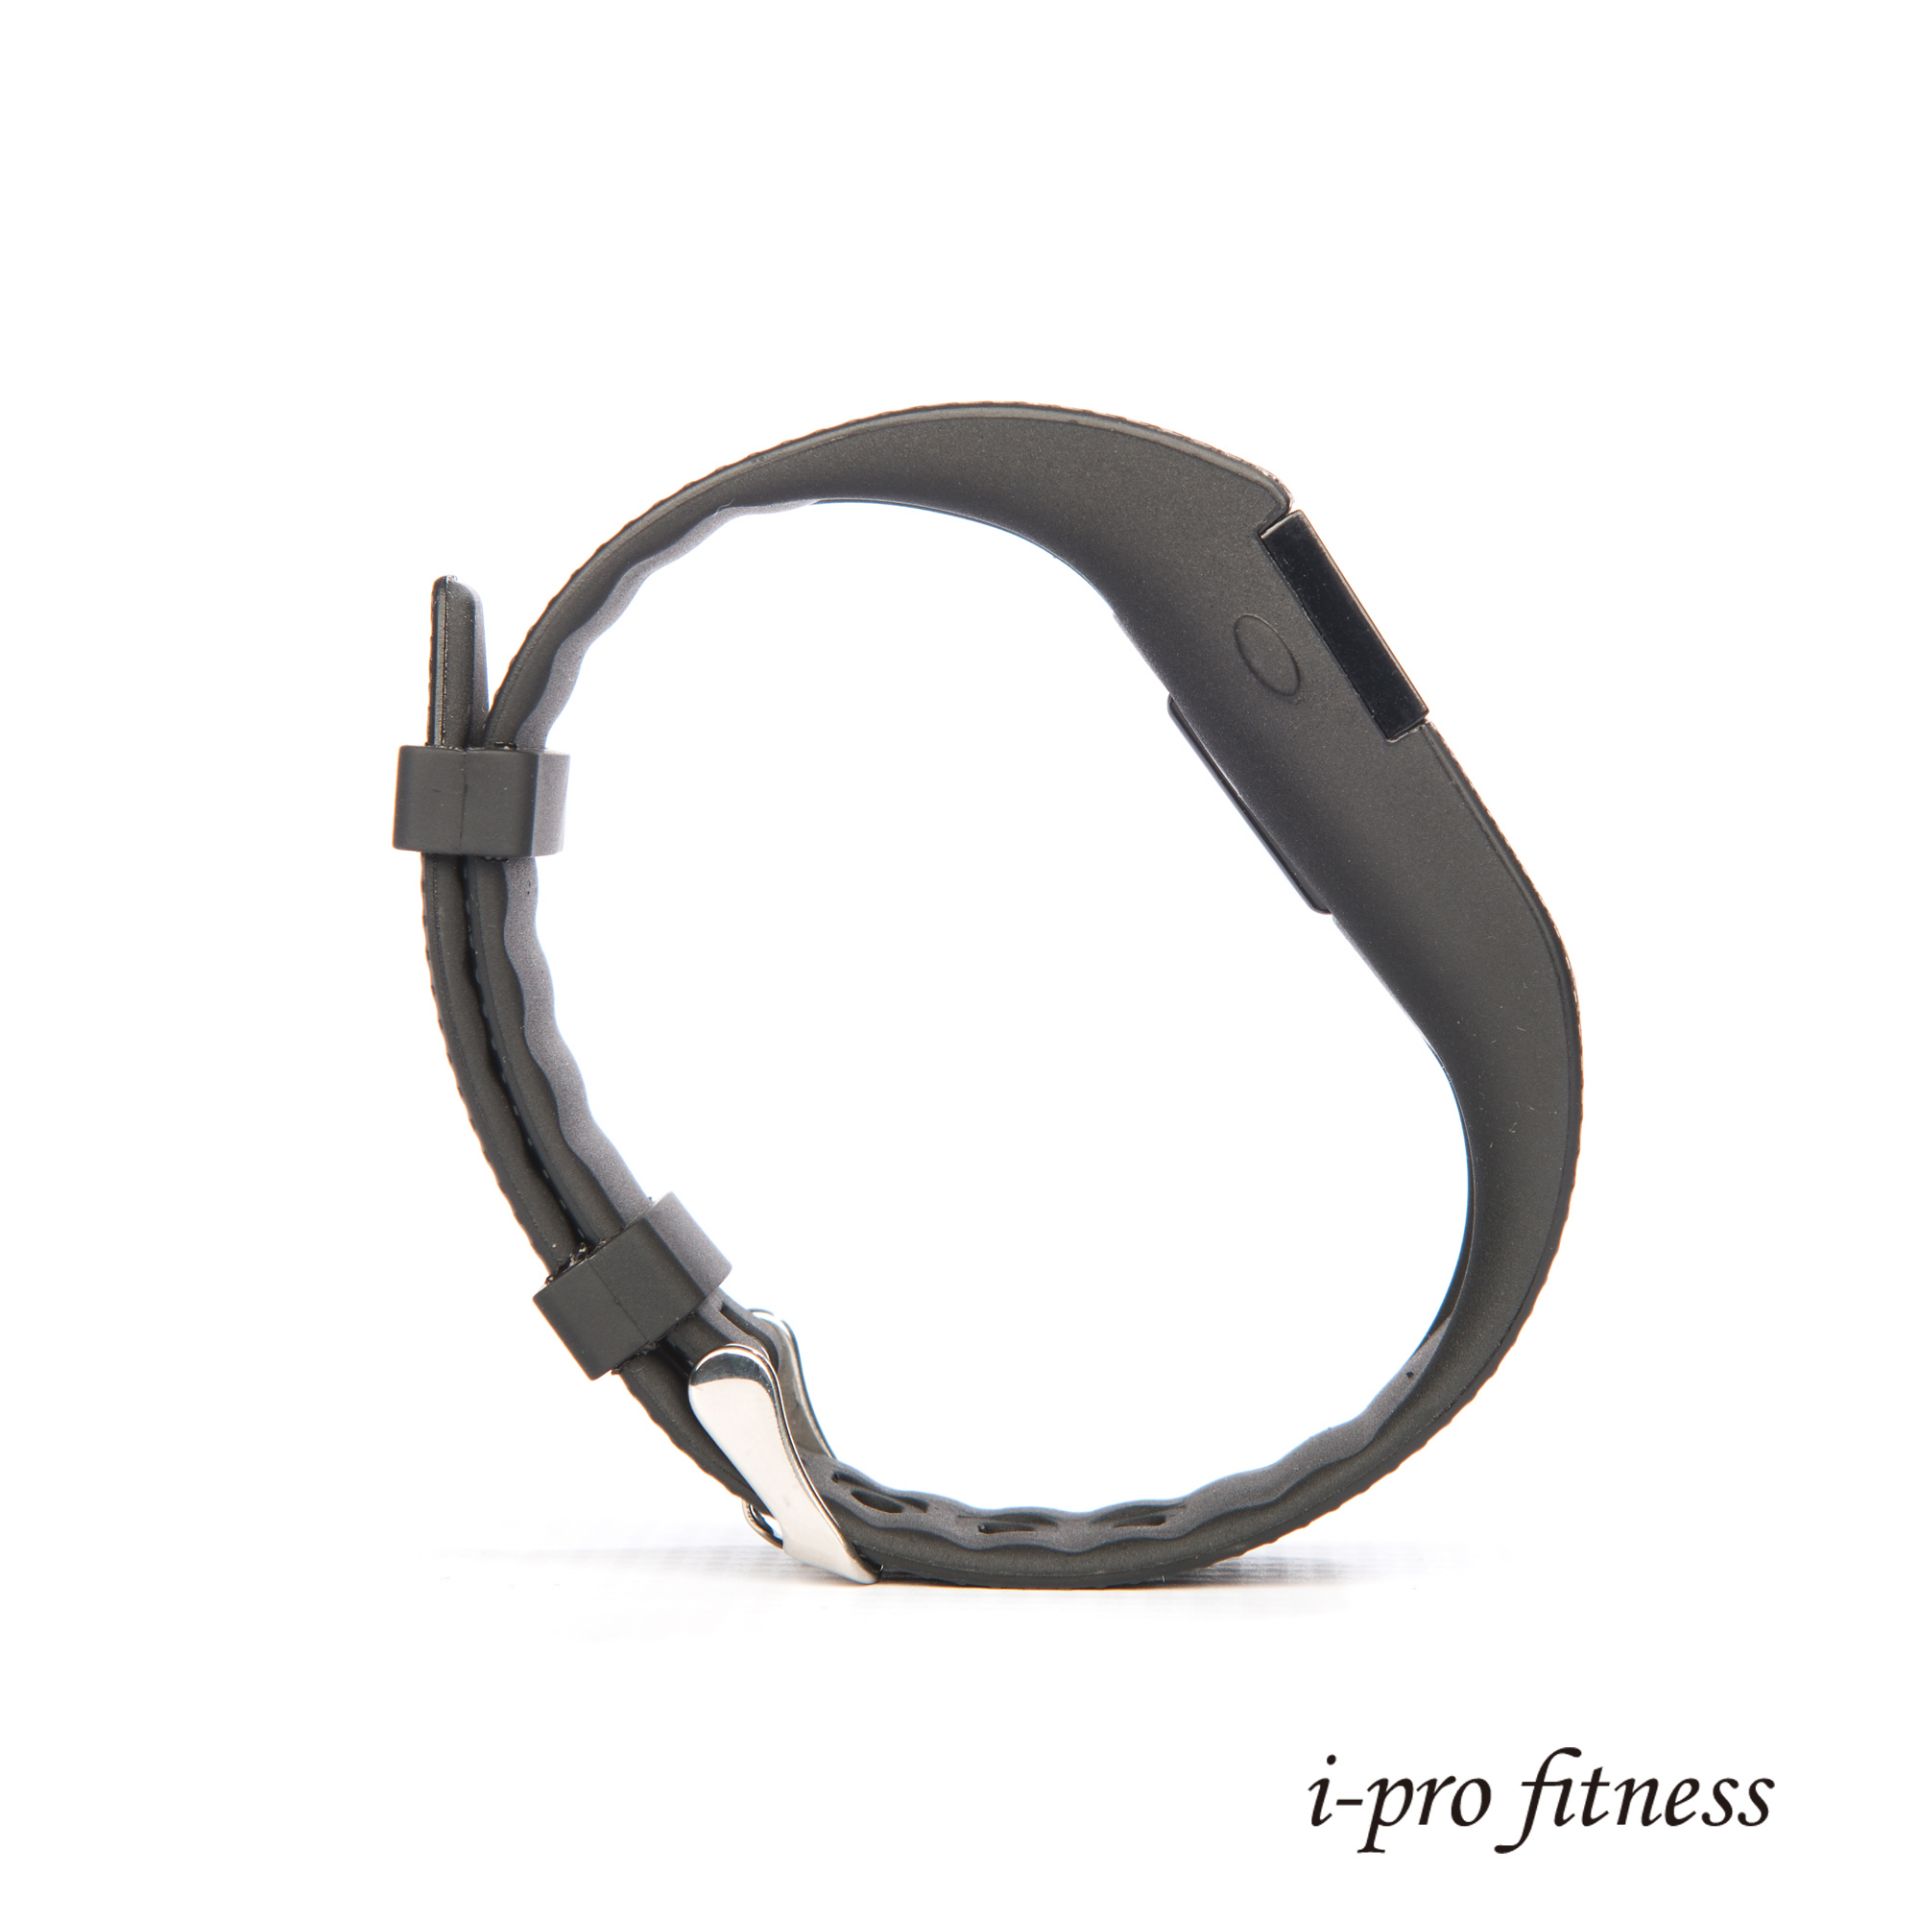 Fitness Tracker i-pro fitness, Bluetooth 4.0 Sports Smart Bracelet, Heart Rate Monitor & Pedometer. - Image 5 of 8